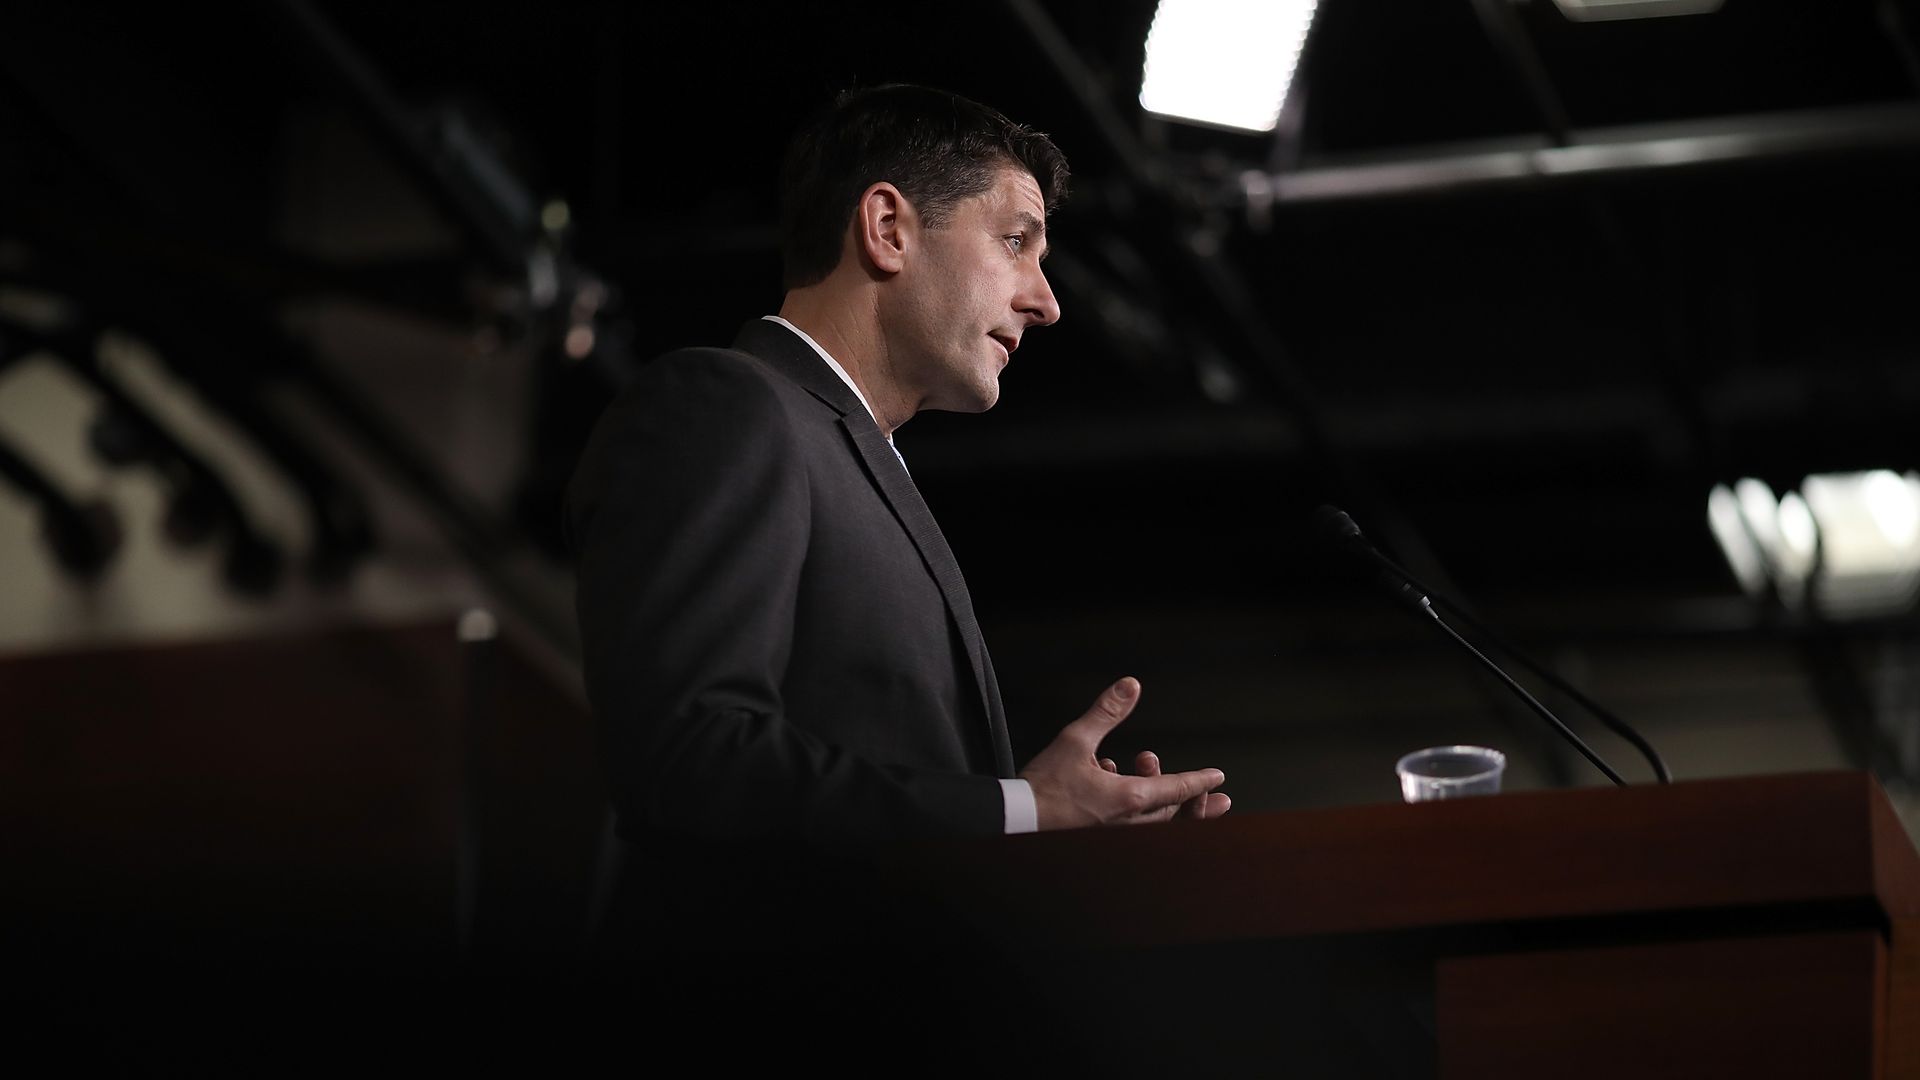 Paul Ryan speaks at a podium.